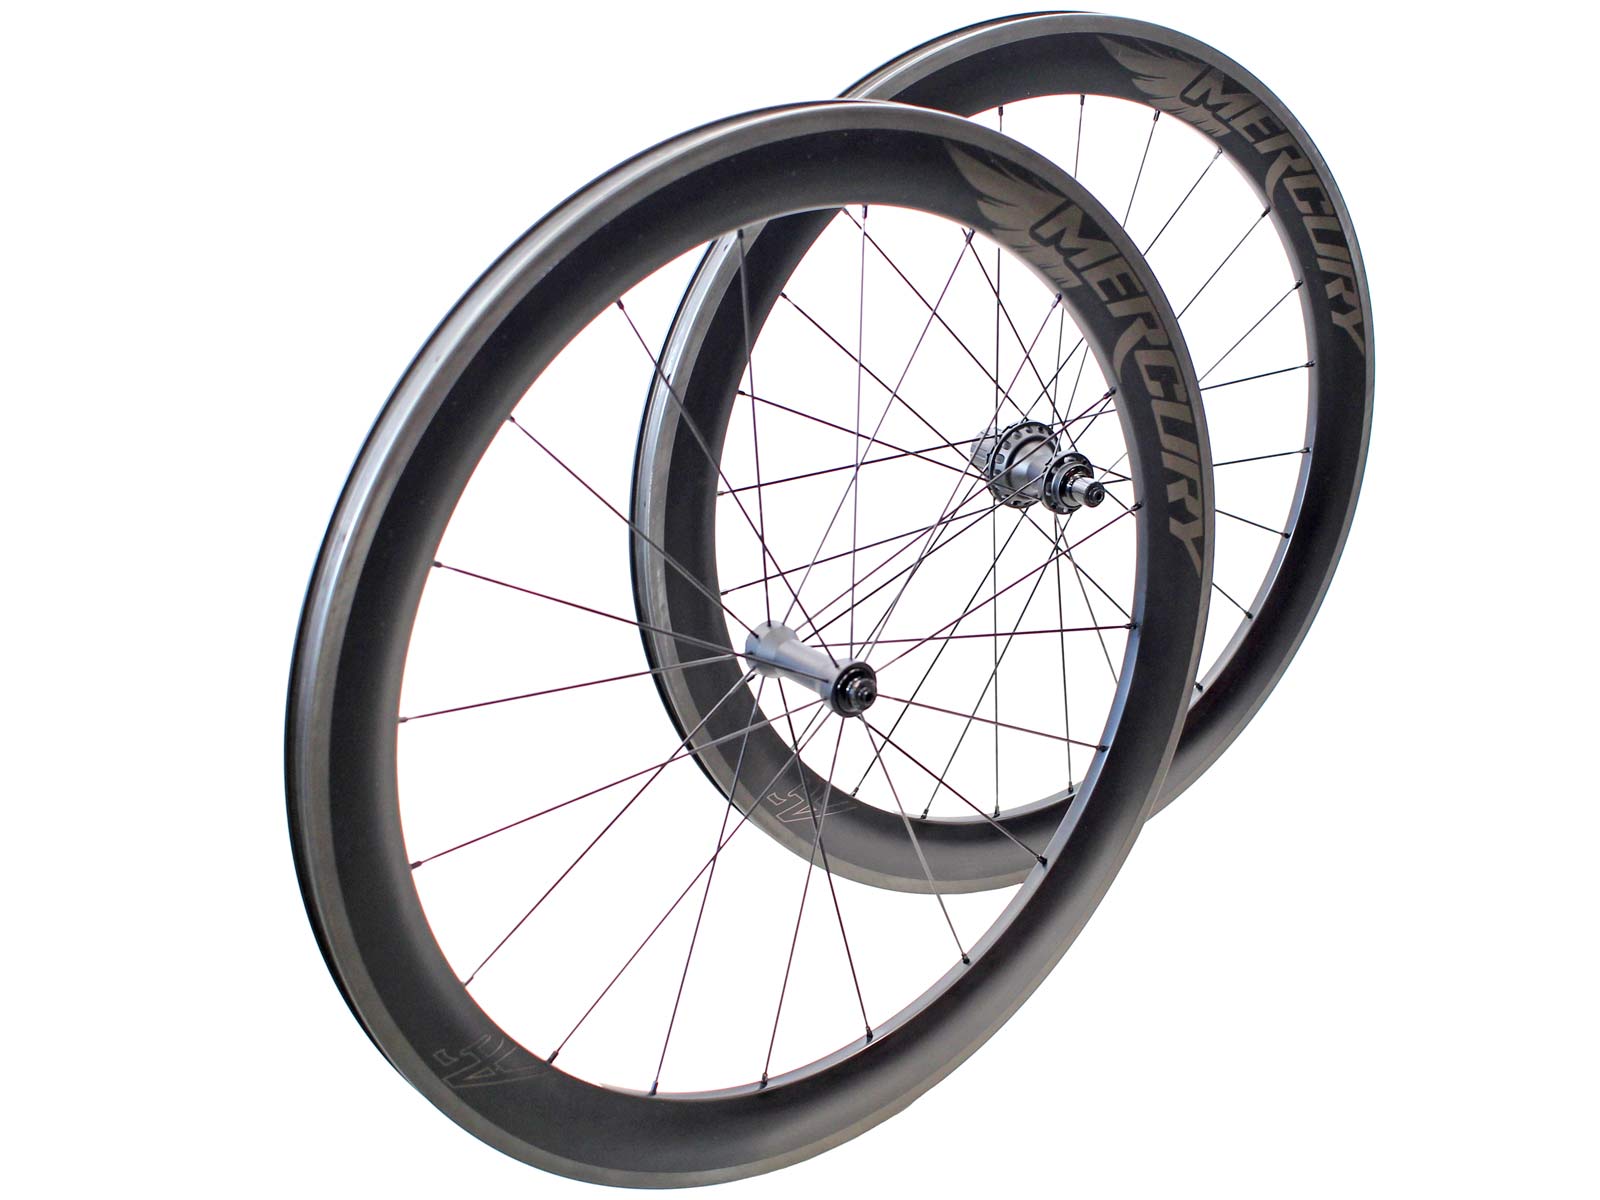 Mercury A-Series carbon road wheels Kamm Tail 10 aerodynamic road bike wheels, designed by Paul Lew aero guru A5